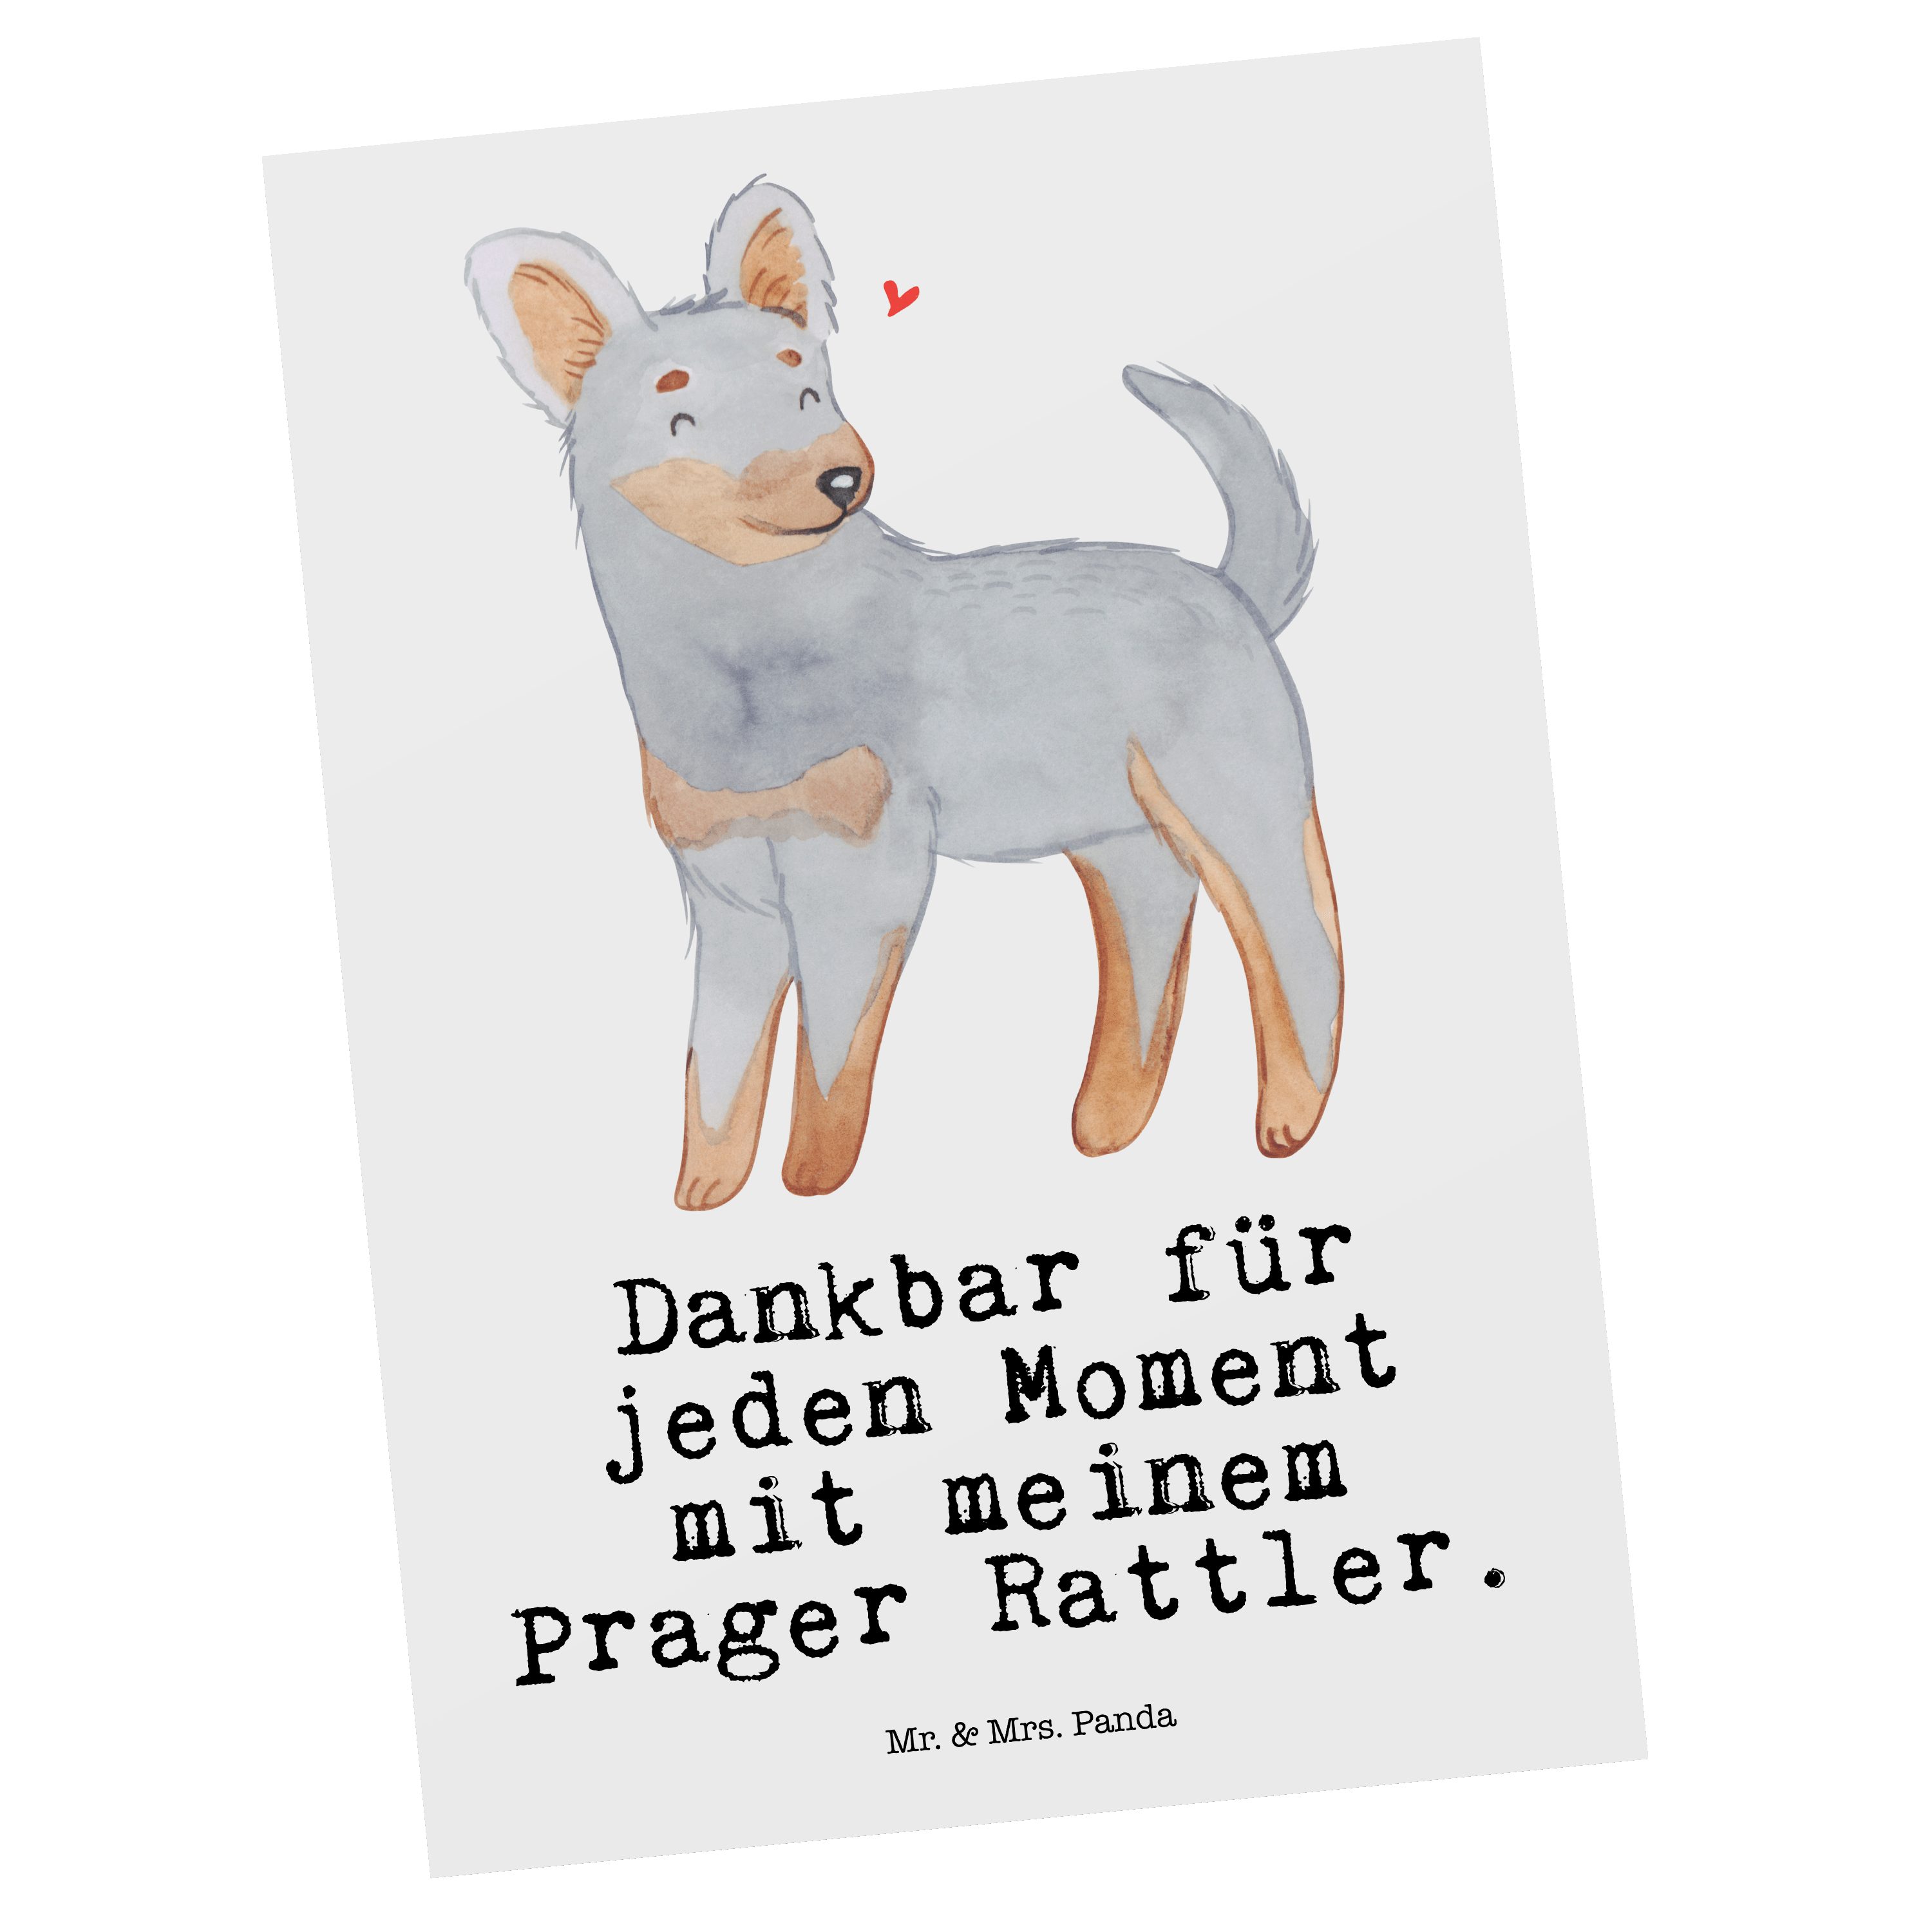 Mr. & Mrs. Panda Postkarte Prager Rattler Moment - Weiß - Geschenk, Geschenkkarte, Hund, Ansicht